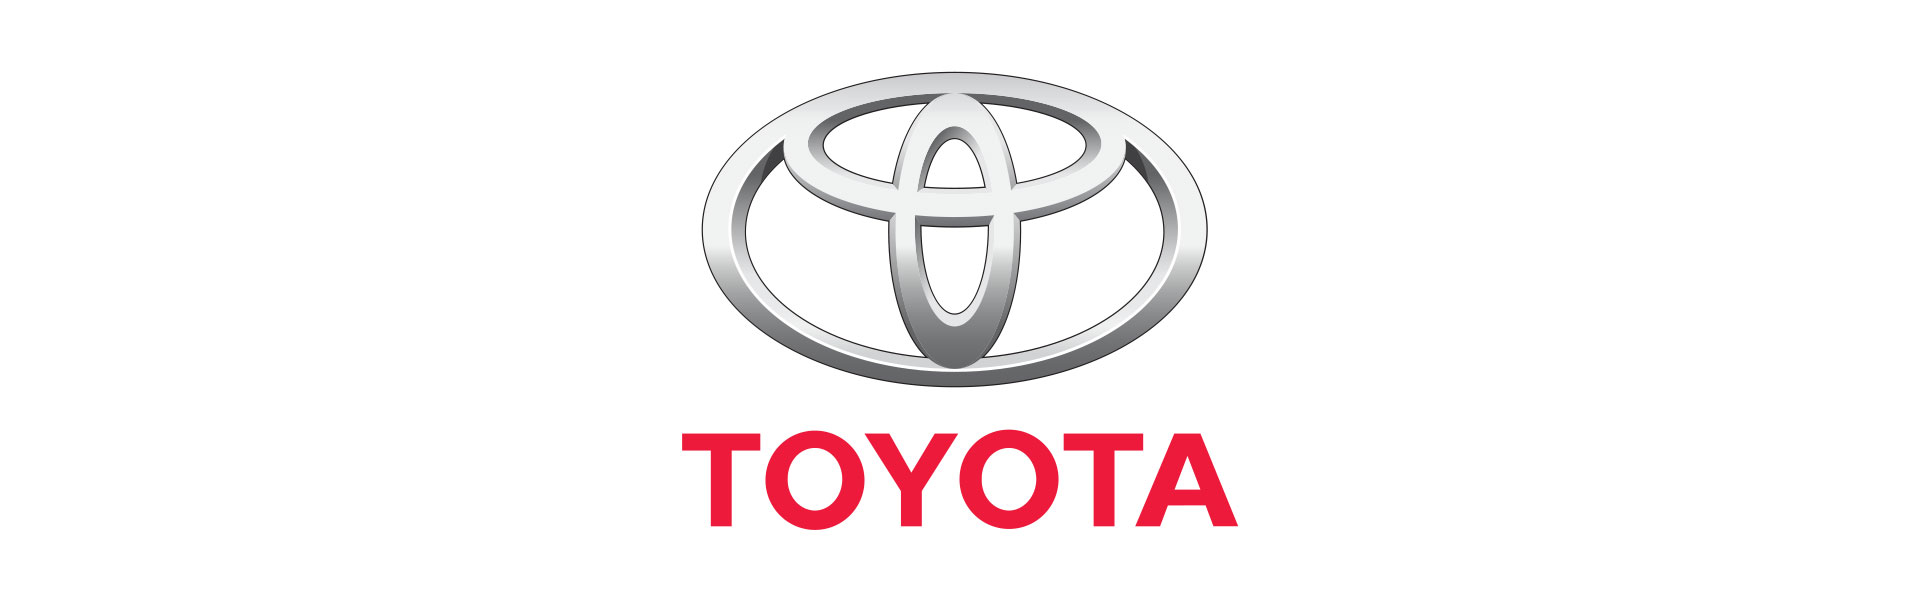 Toyota banner